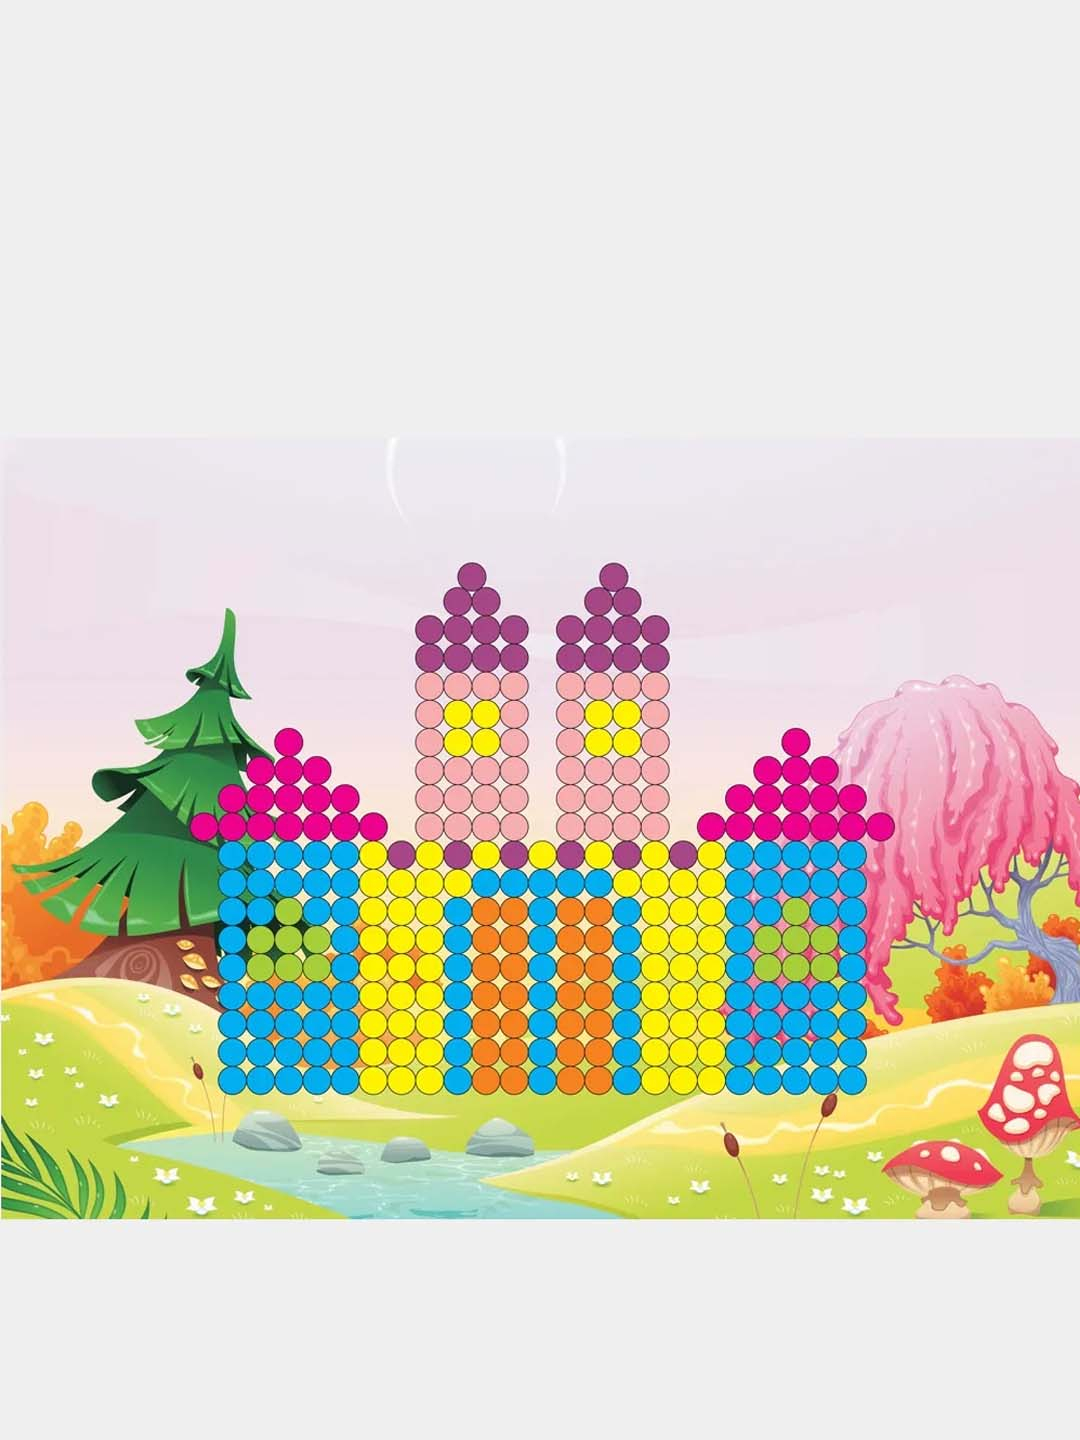 Мозаика 6 см. Набор Hobbius MDS-06 10 машина 20,5*29 см. Замок из мозаики. Замок мозаика кубики. "Hobbius" MDS-08 мозаика 19.5 x 26.5 см №05 Сова.